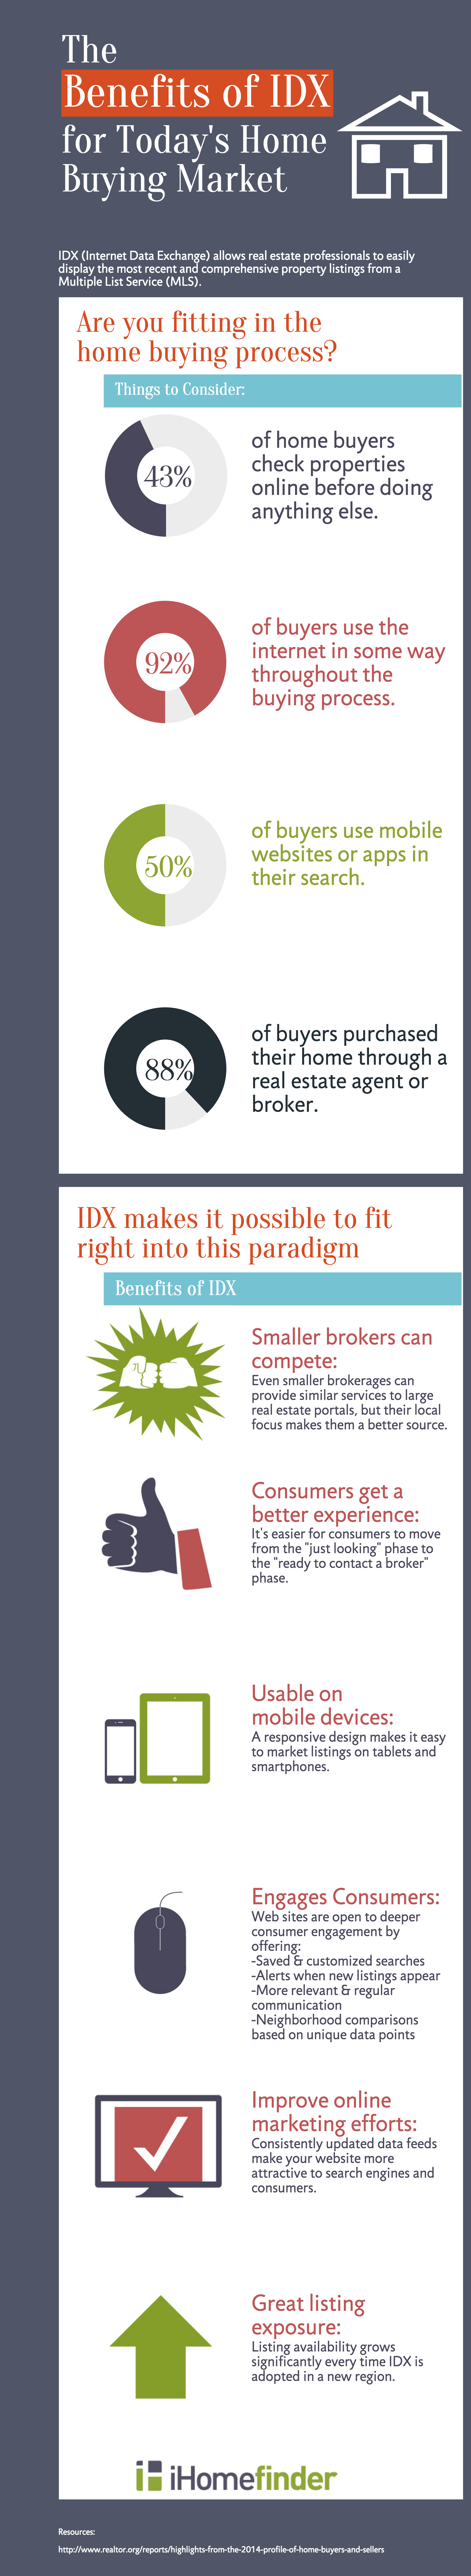 Benefits of IDX